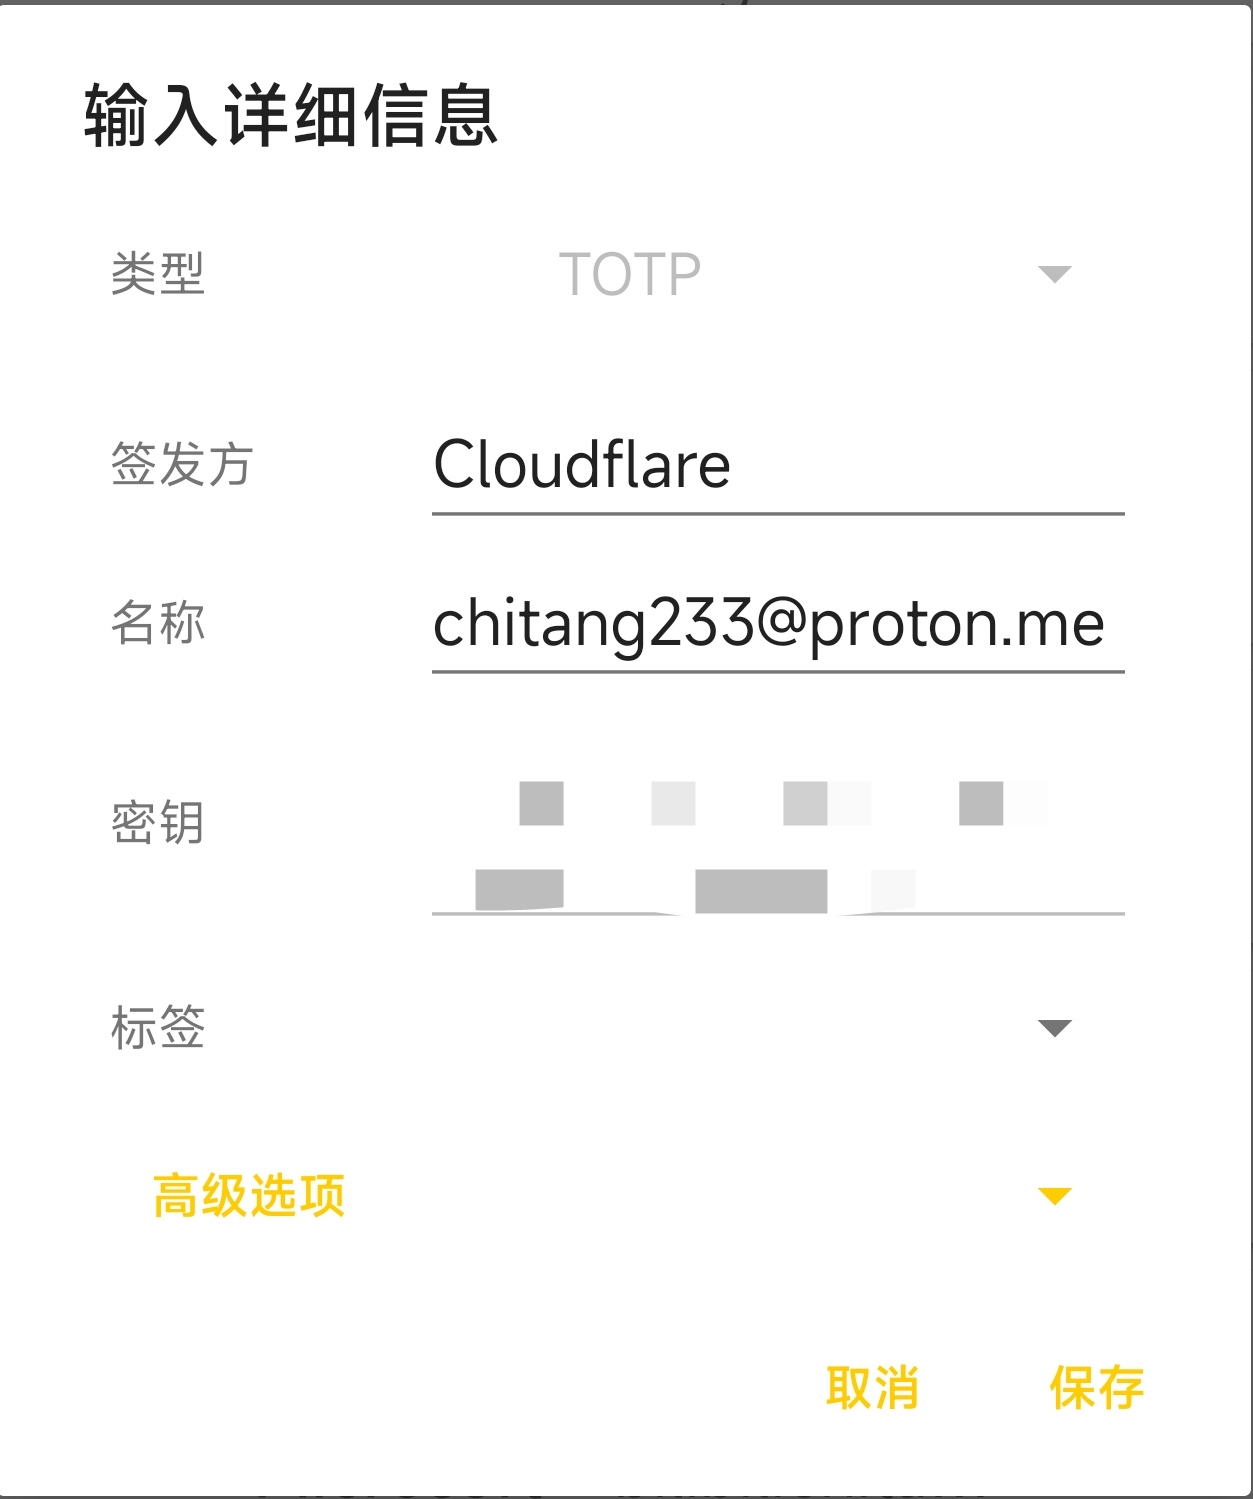 Cloudflare 详细信息